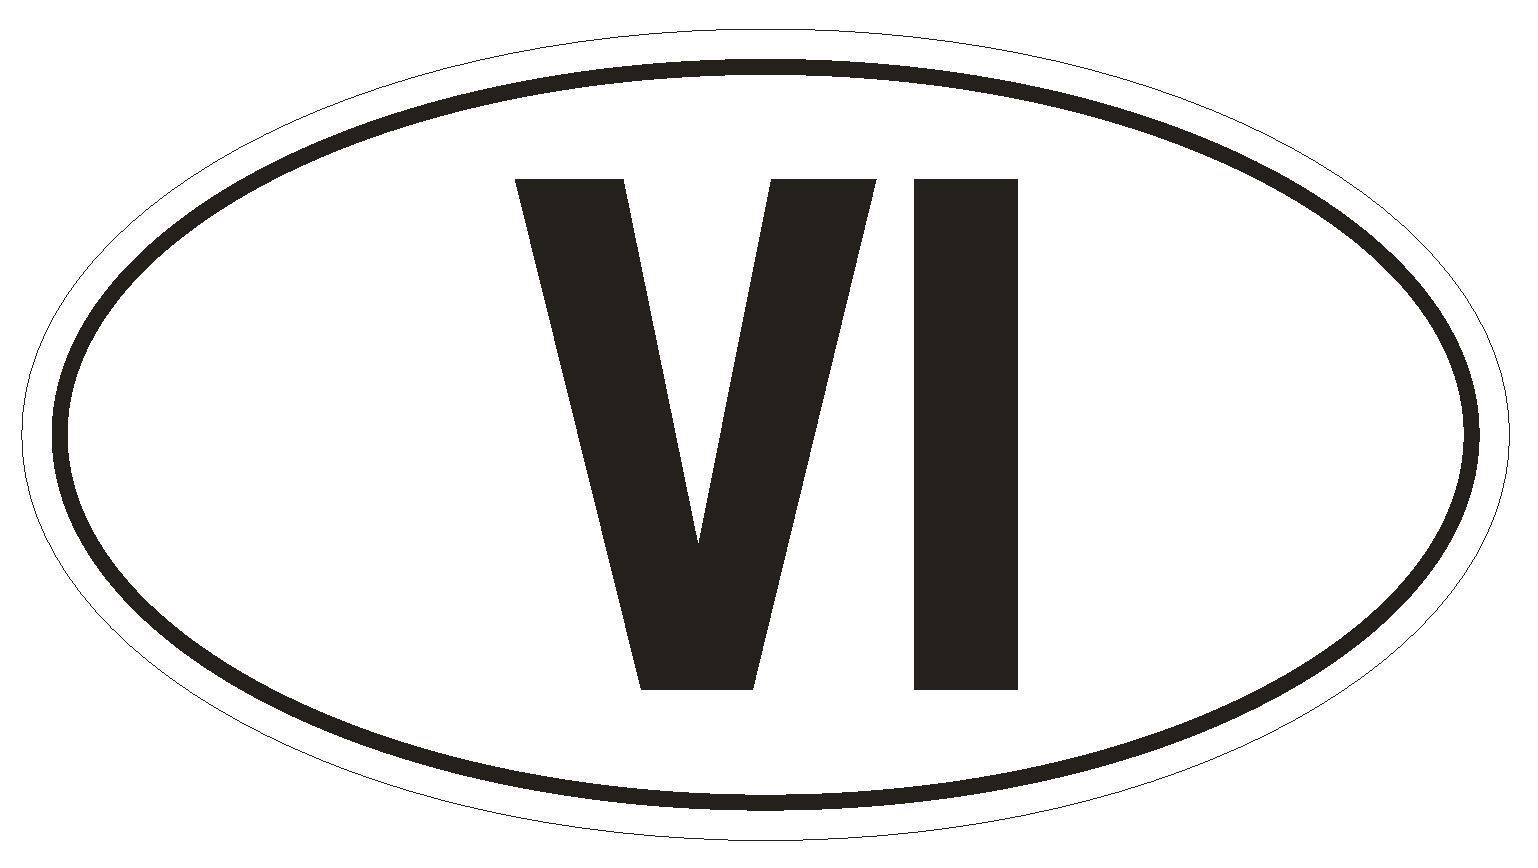 Primary image for VI U.S. Virgin Islands Country Code Oval Bumper Sticker or Helmet Sticker D912